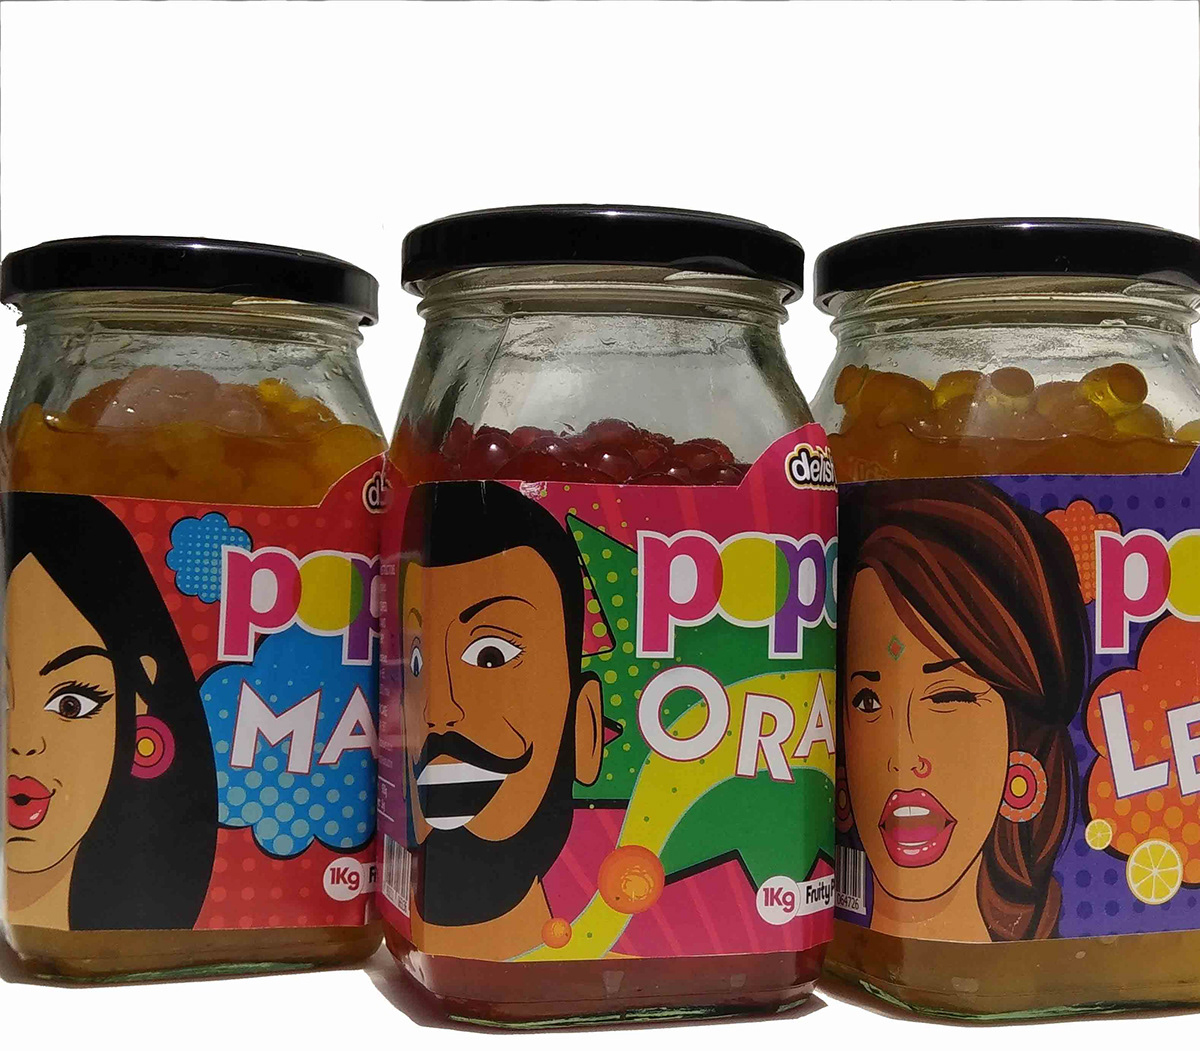 branding  Packaging Pop Art Logo Design food & beverage Patterns Digital Art  popdrop desighdimensions